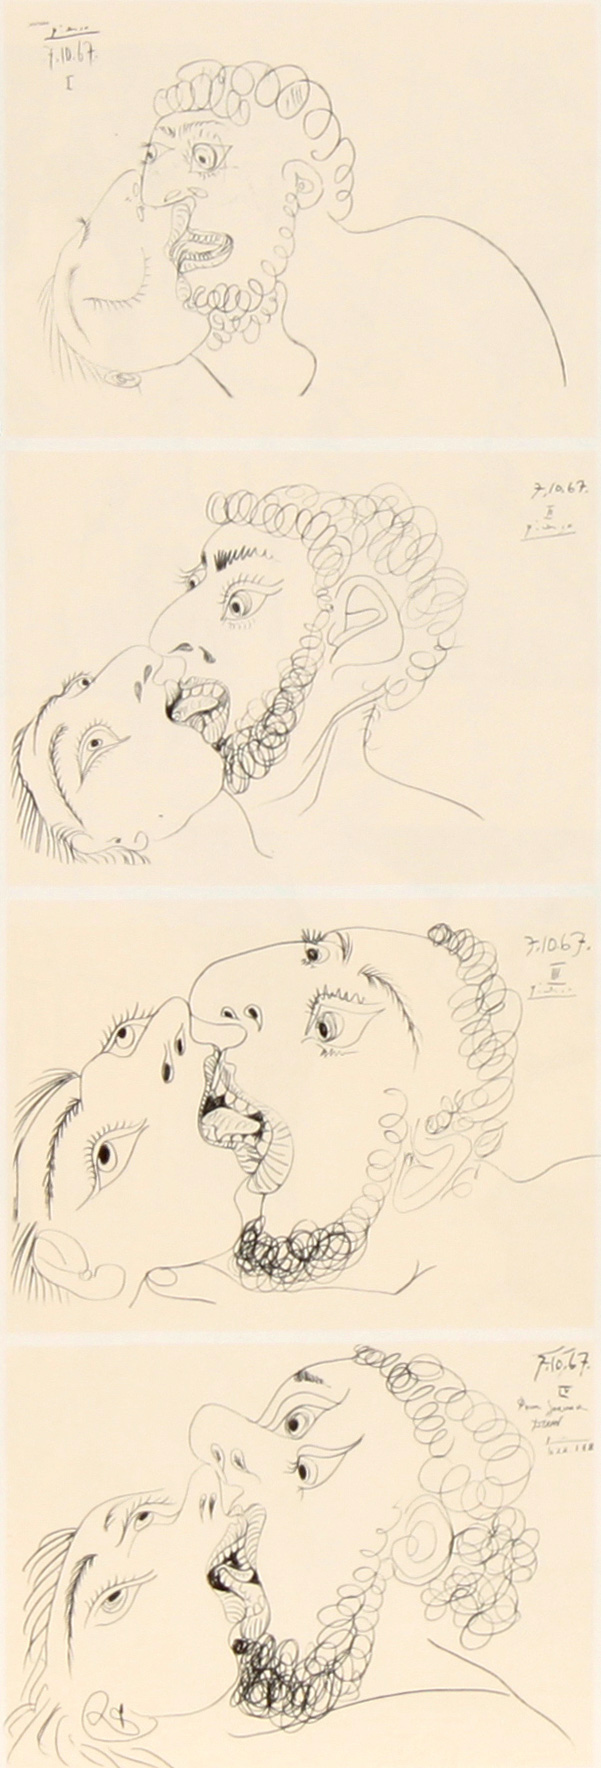 Pablo Picasso Dessins - 27.3.66-15.3.68 - ציורים של פיקאסו - Kisses - 07.10.67 I, II, III, IV